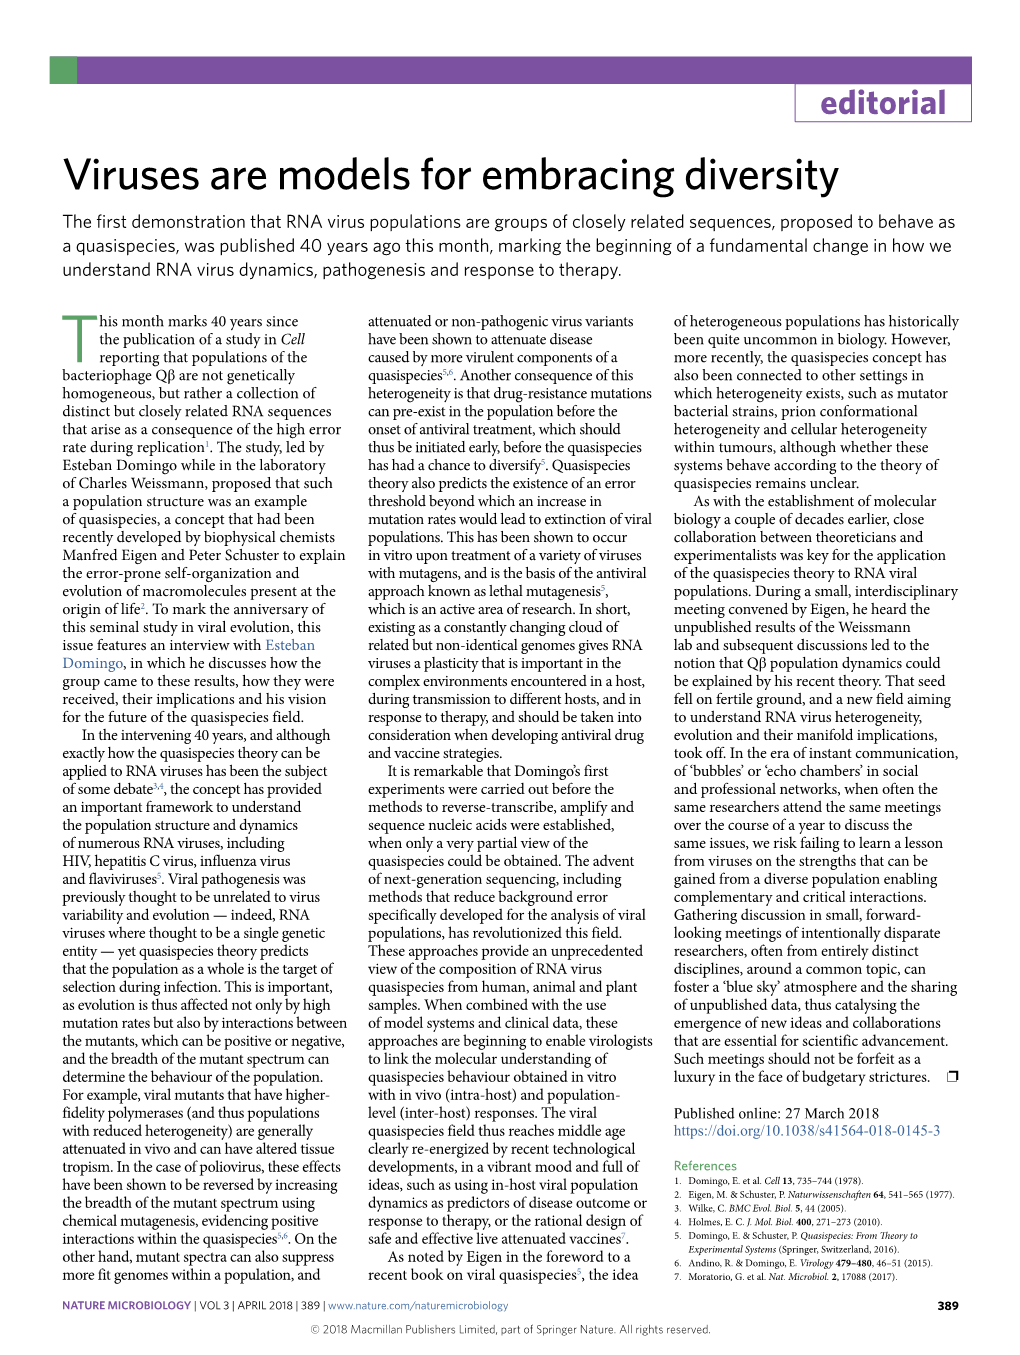 Viruses Are Models for Embracing Diversity